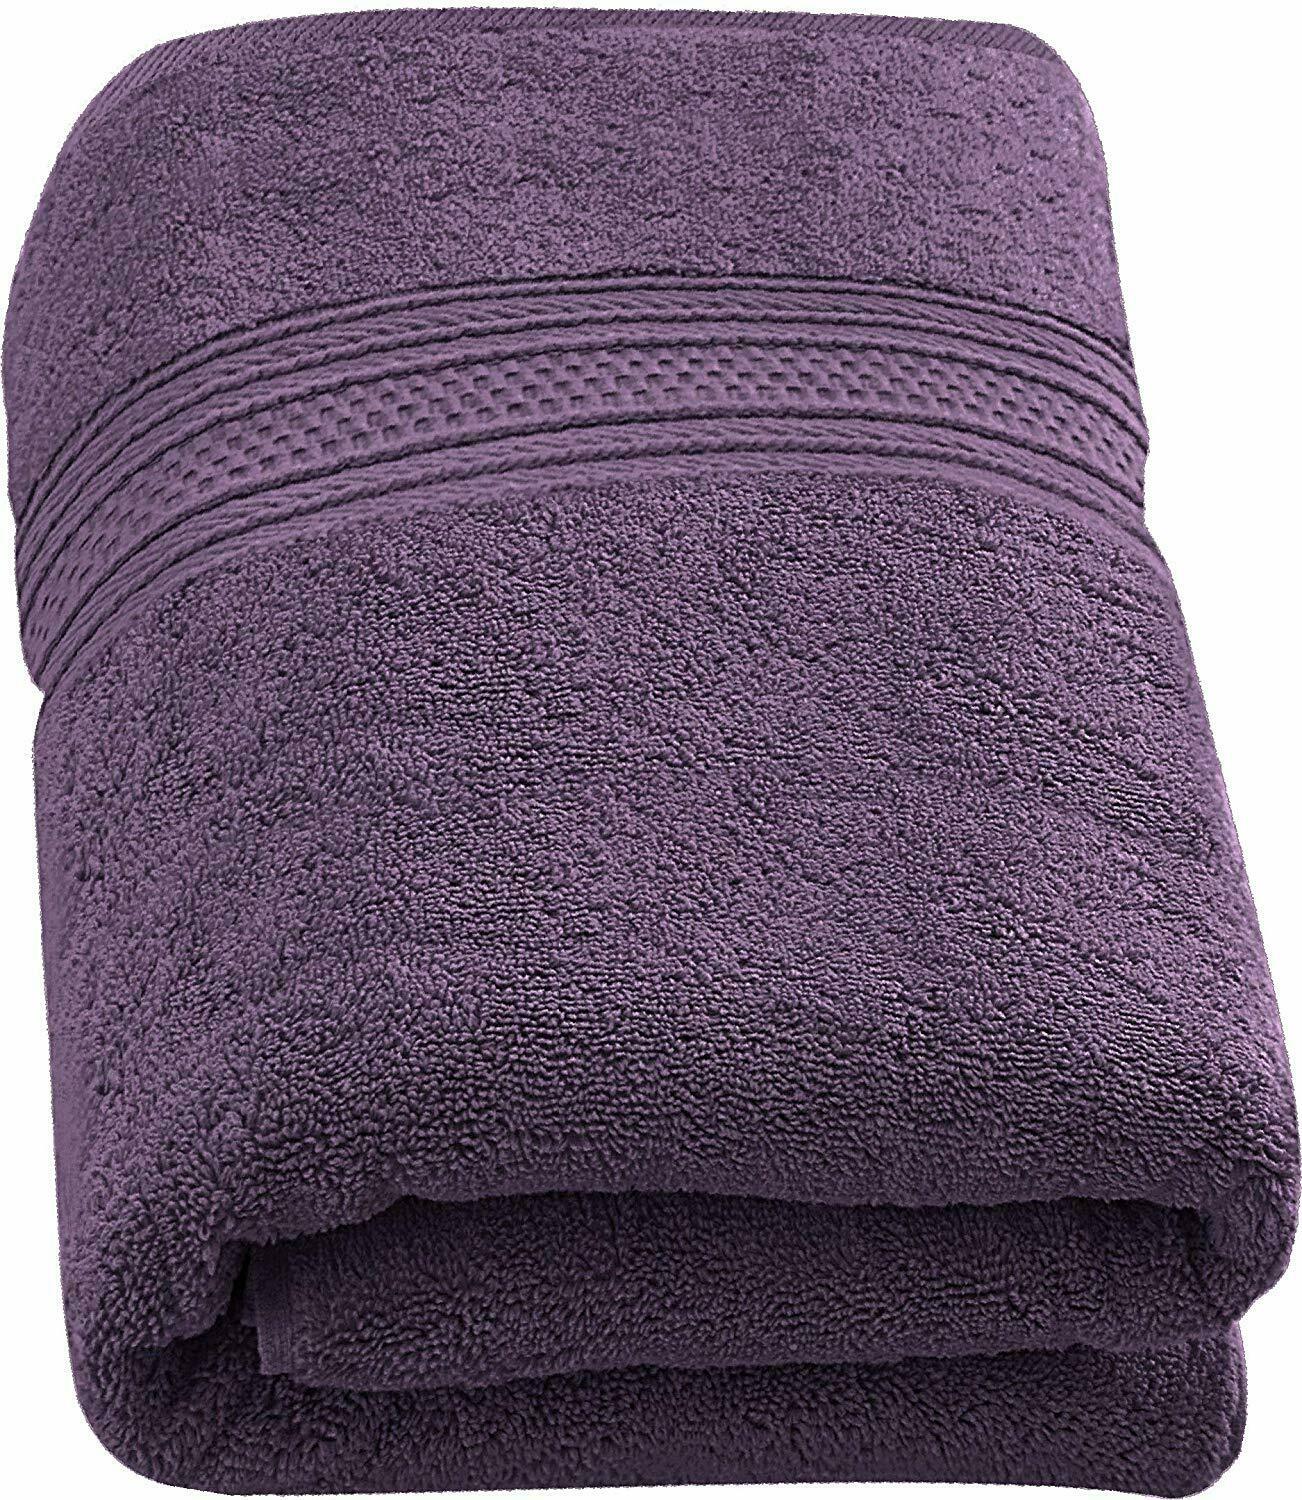 Extra Large Bath Towel 35x70" Cotton Luxury Bath Sheet 700 Gsm Utopia Towels